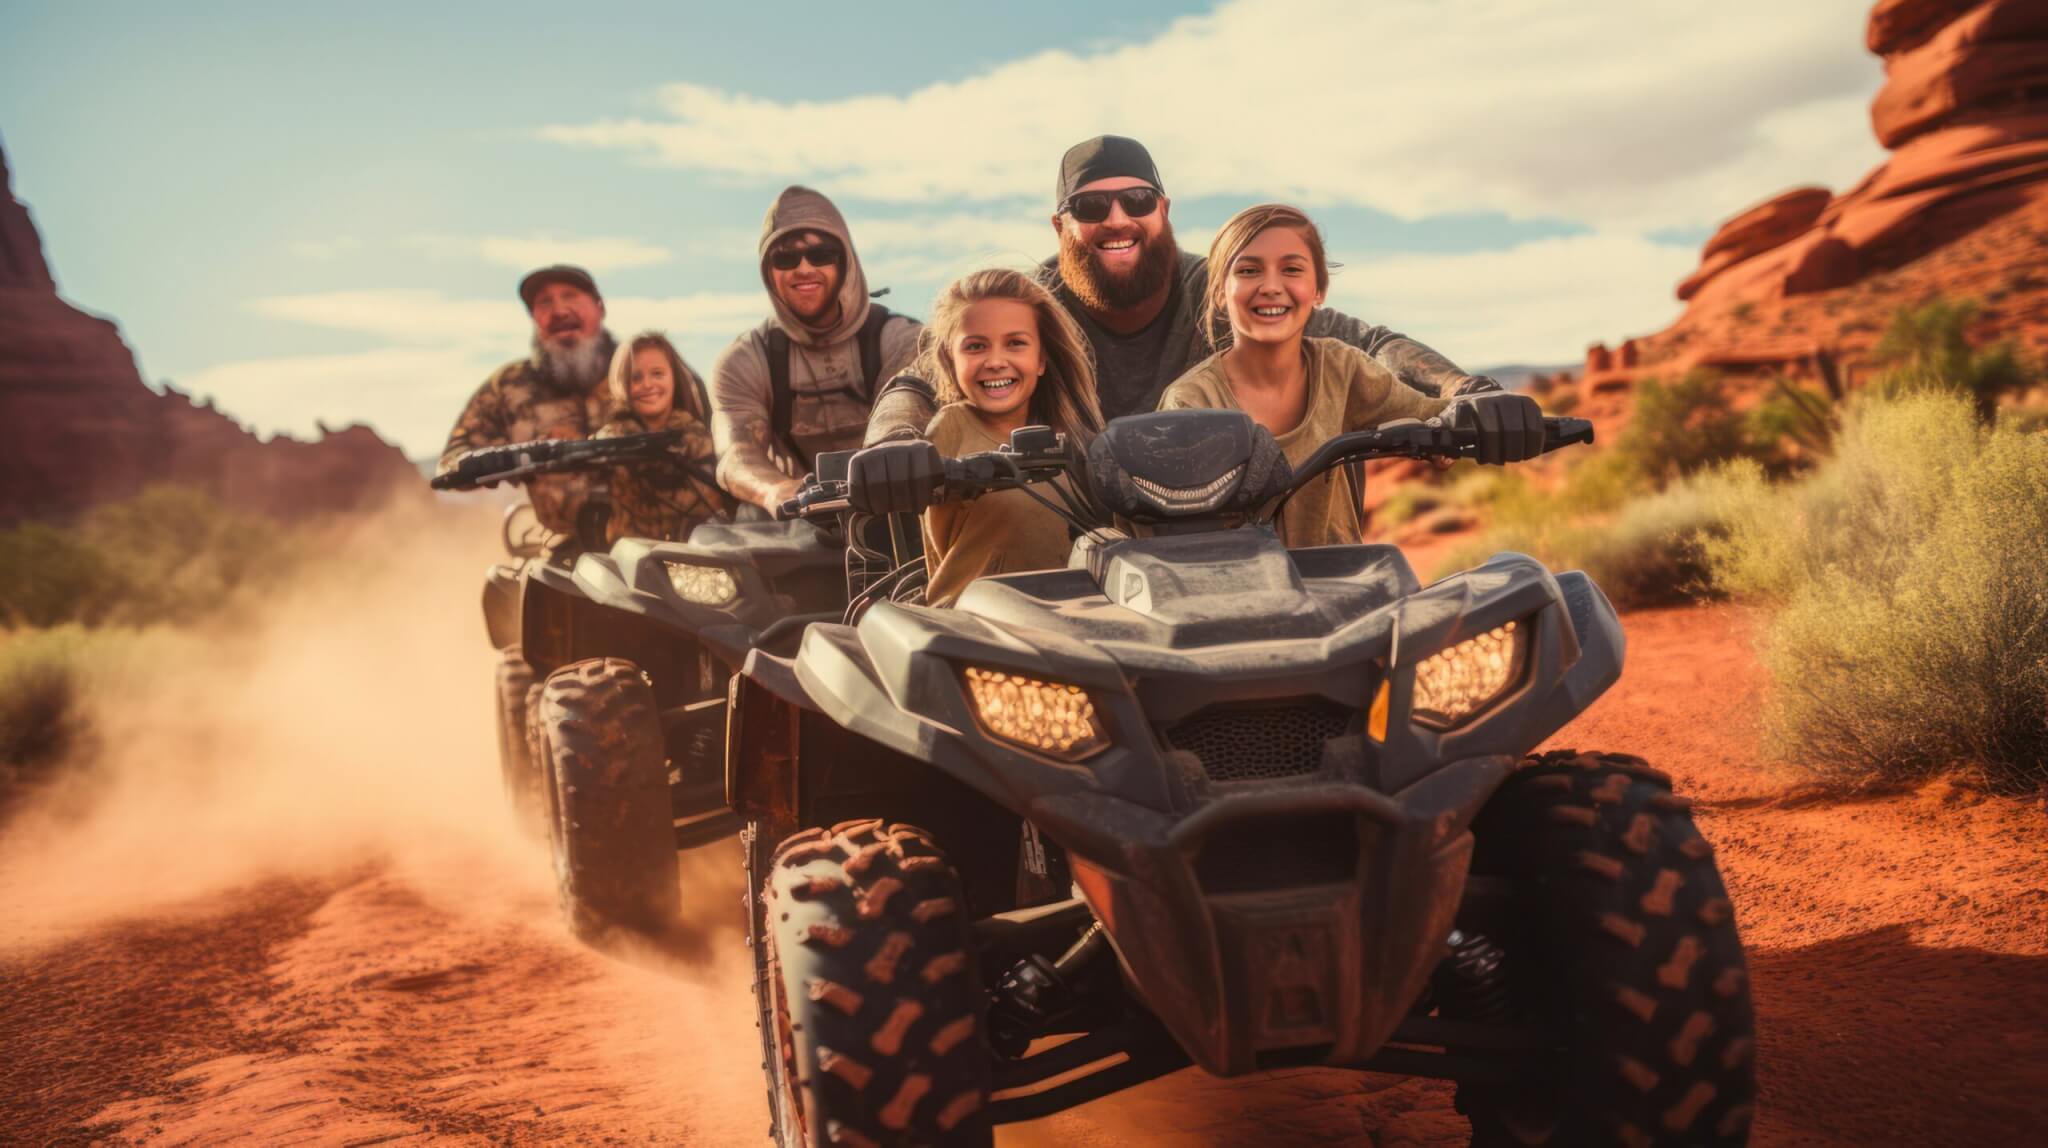 Action-Packed Arizona ATV Adventure with Family and Friends in Stunning Sedona Desert